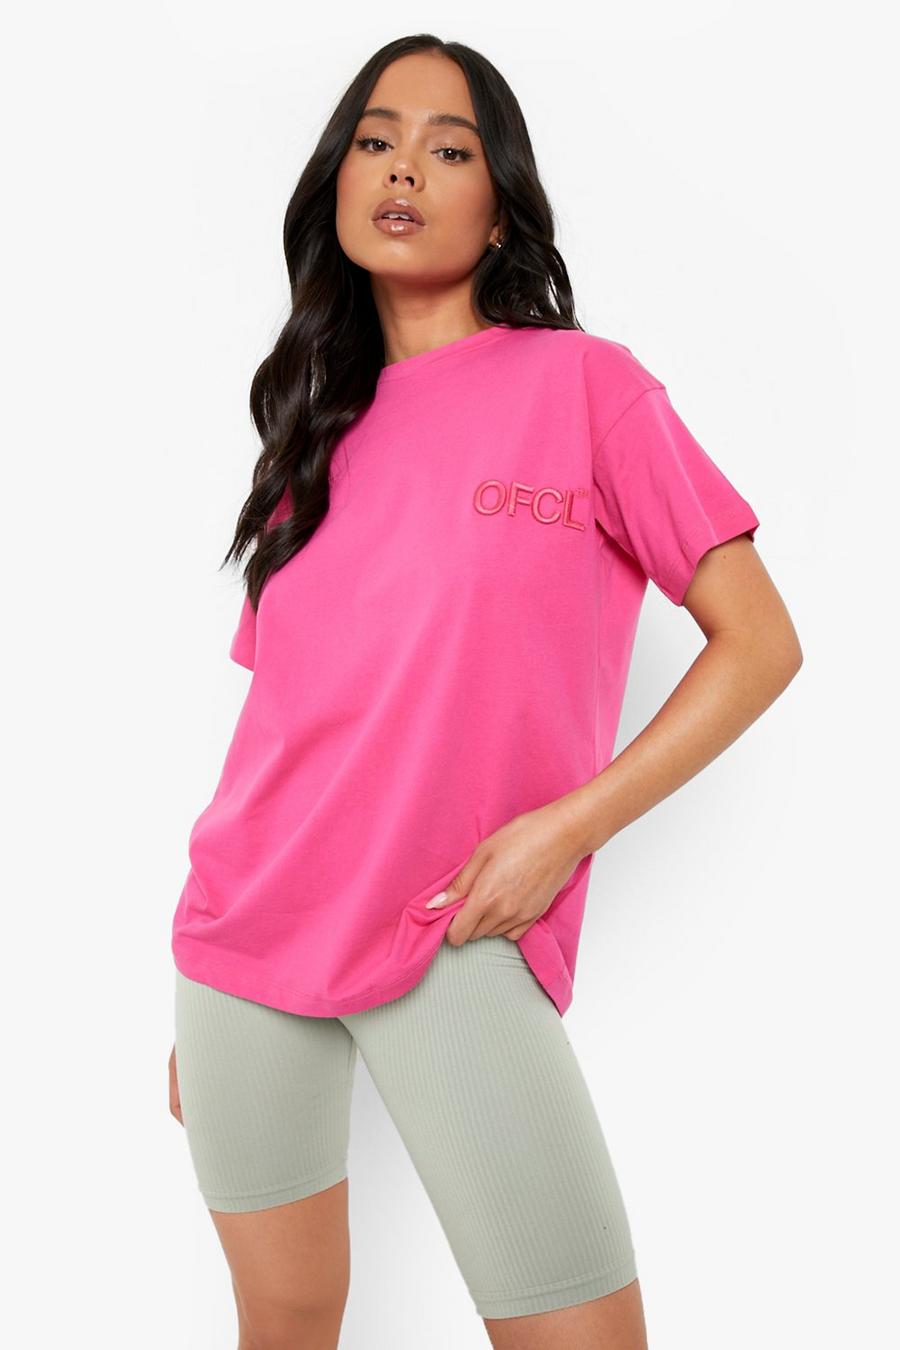 Petite - T-shirt avec broderie - Ofcl, Hot pink rose